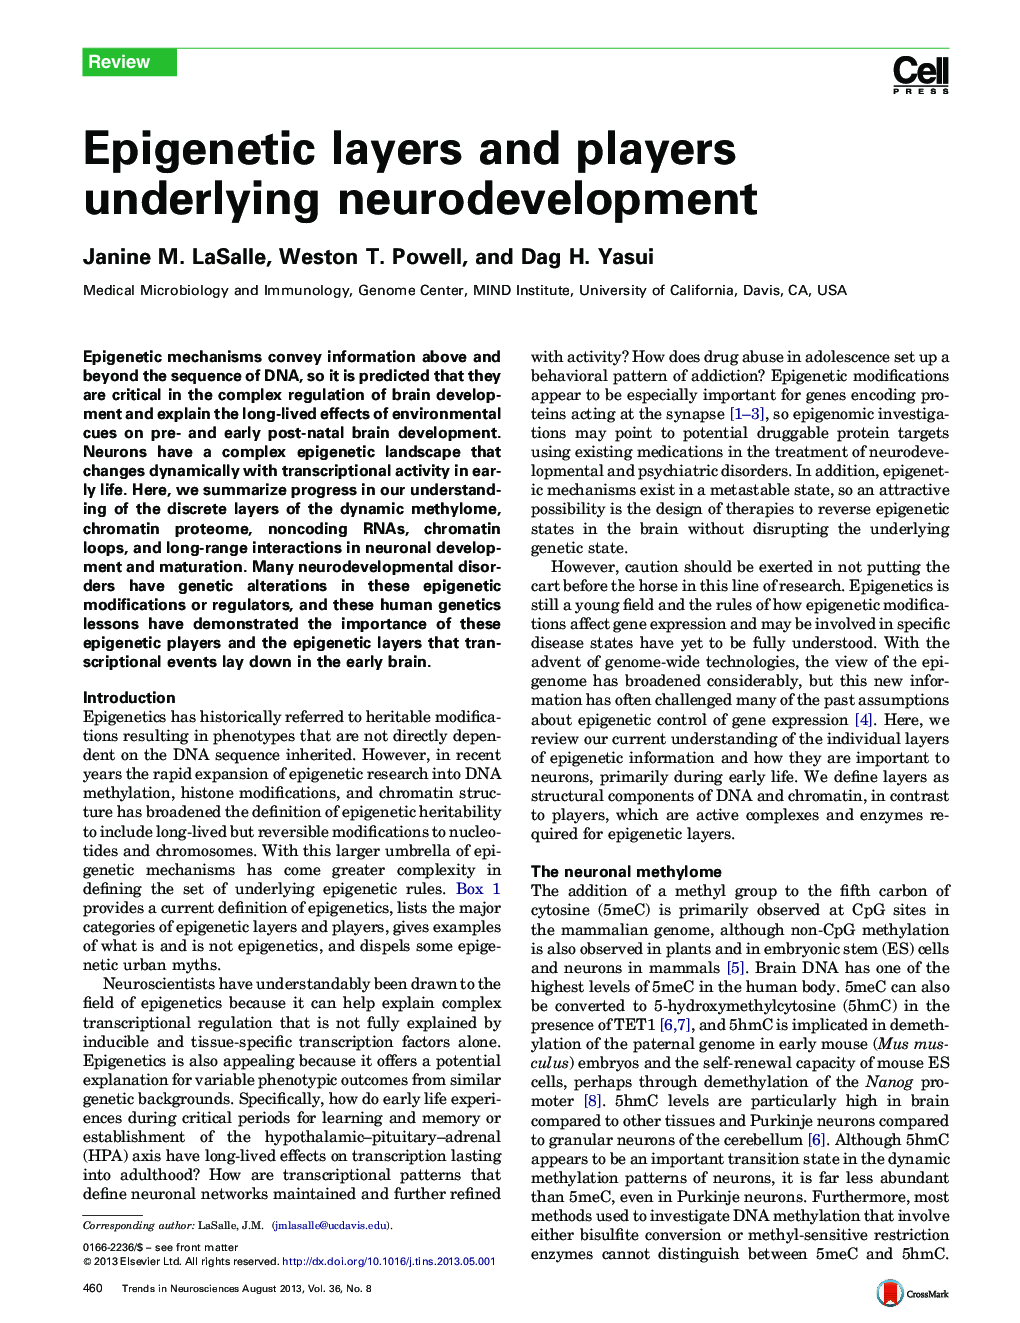 Epigenetic layers and players underlying neurodevelopment